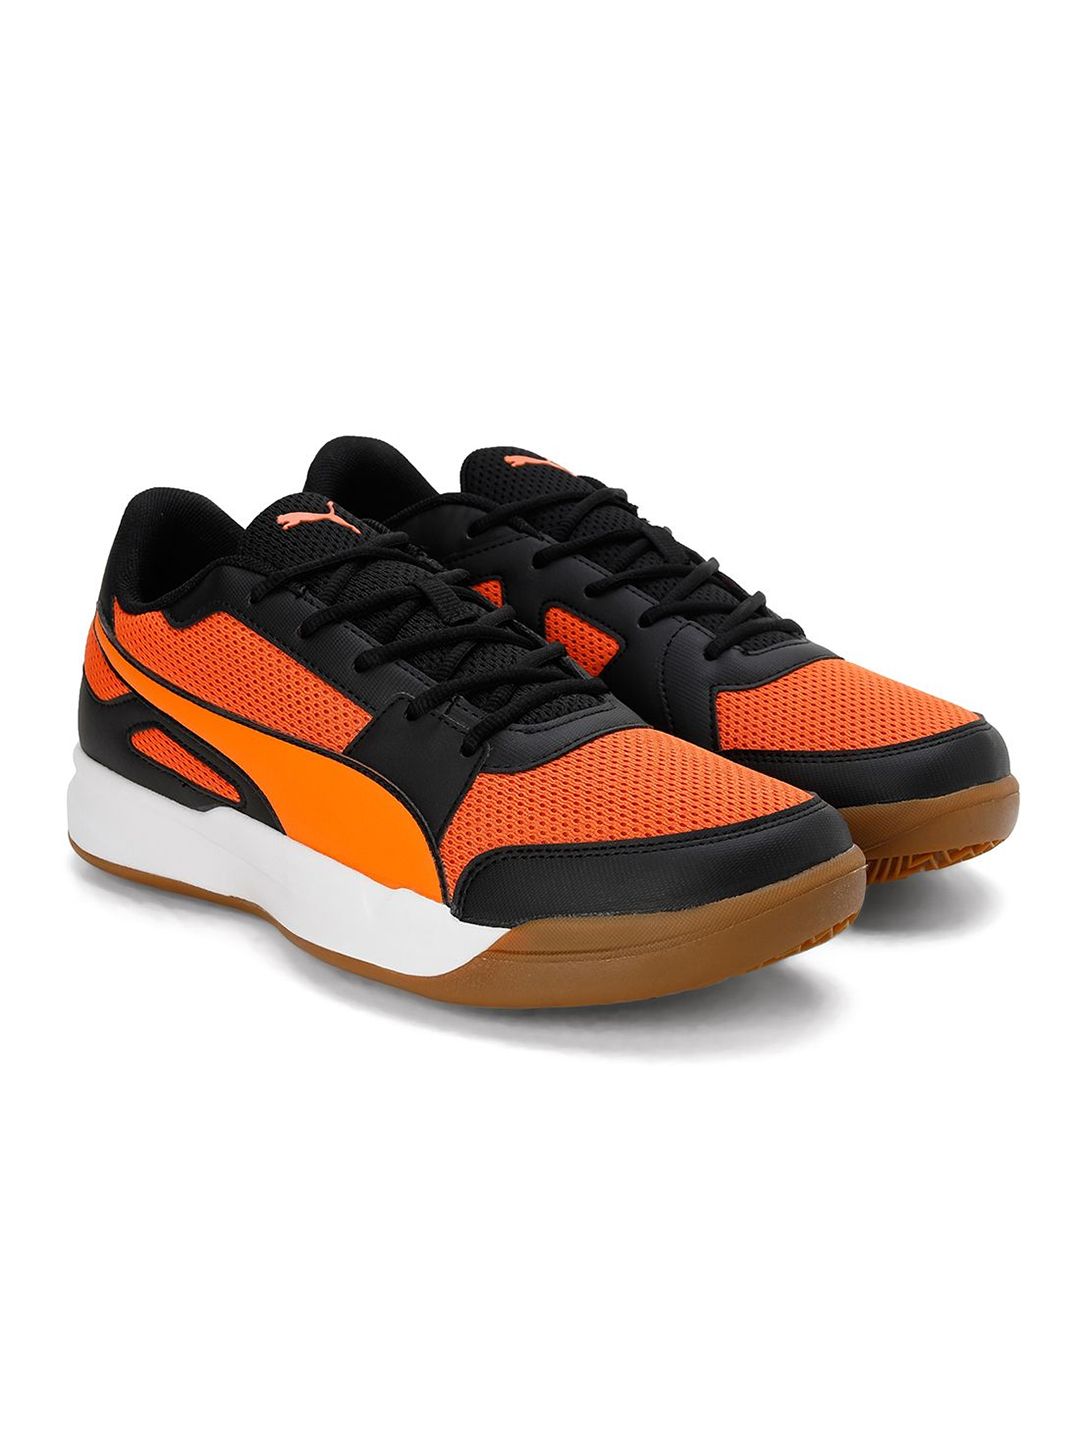 Buy Unisex Black & Orange Deuce Indoor Sports Shoes From Fancode Shop.